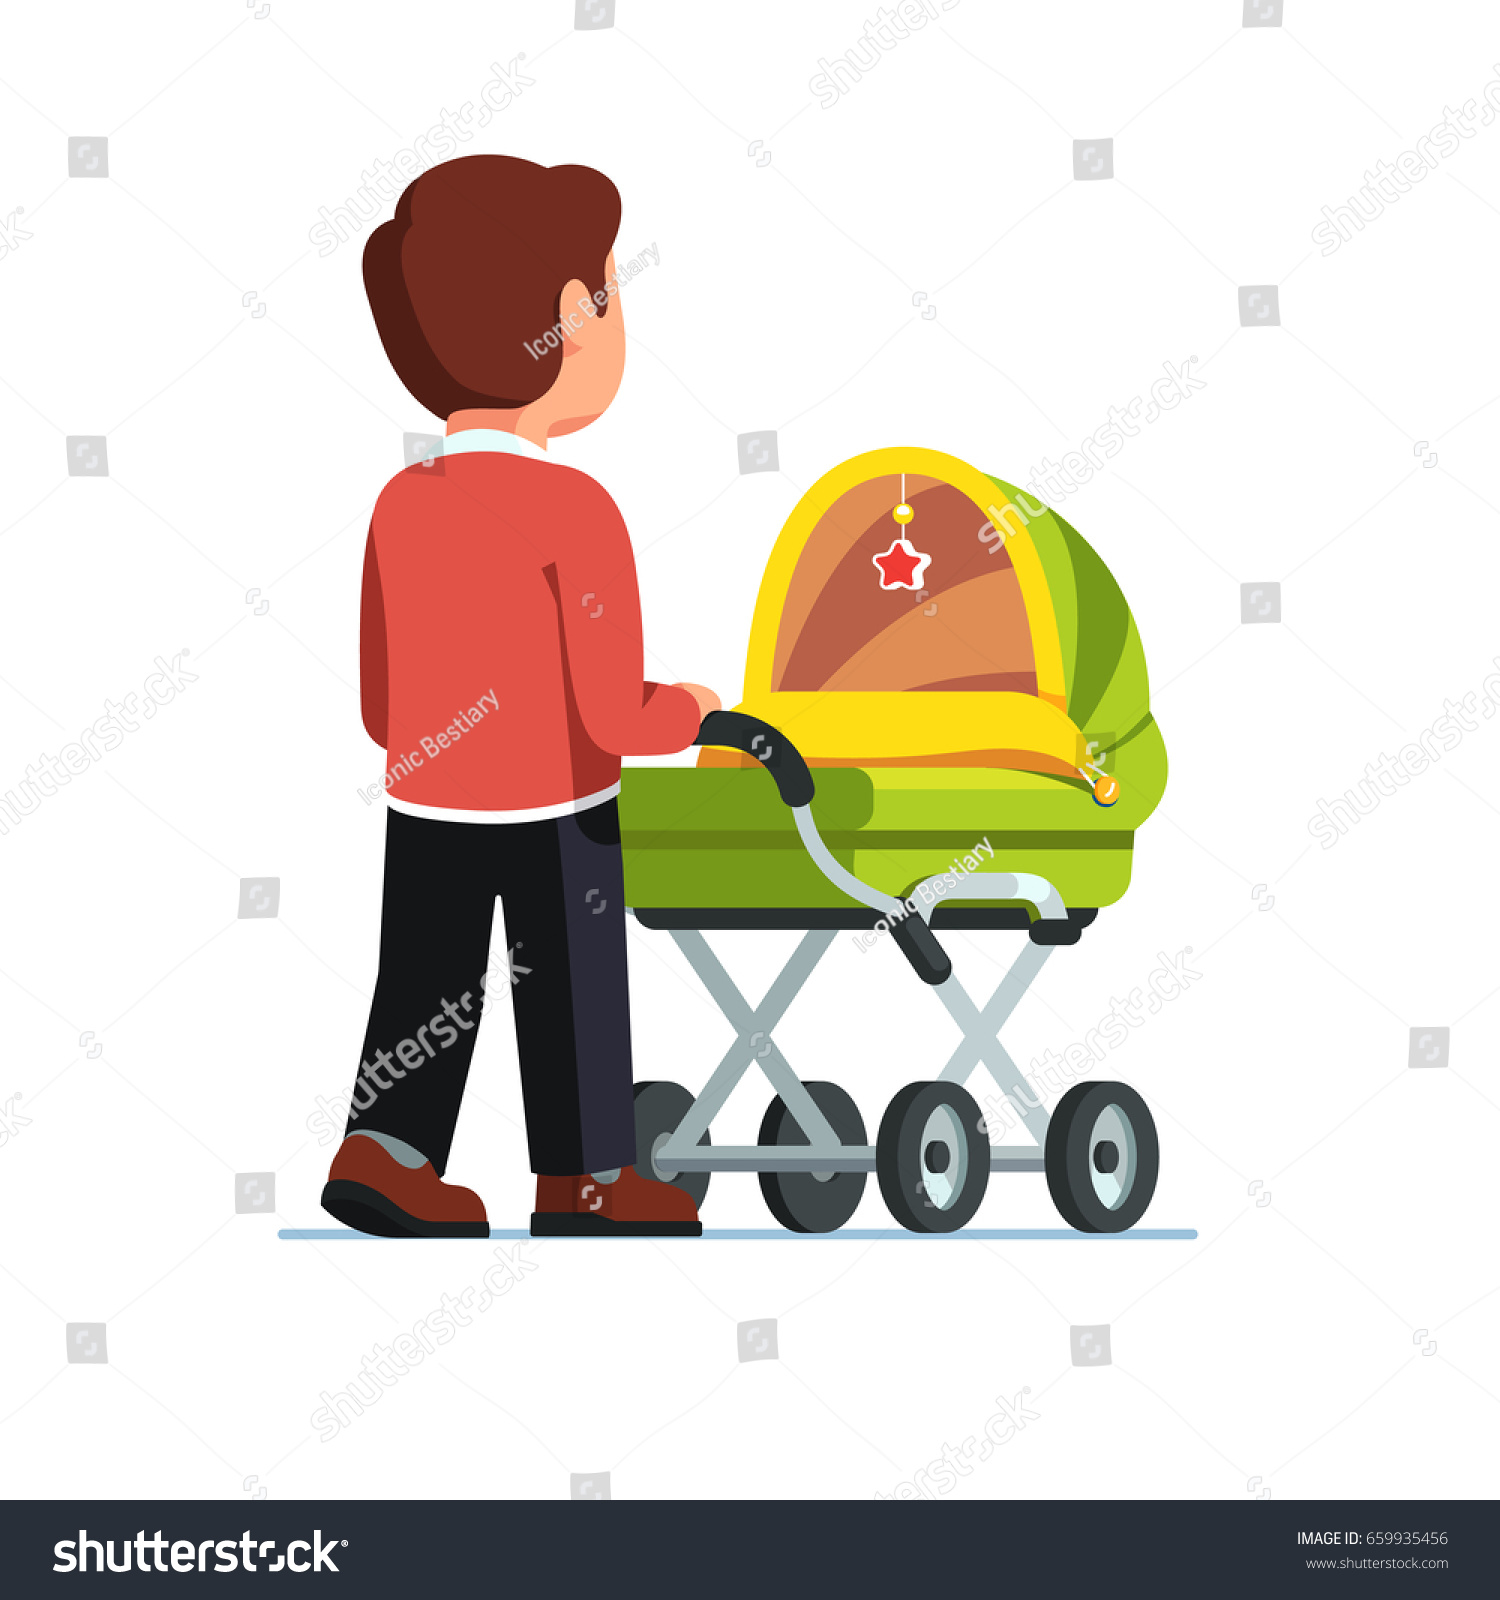 child care stroller